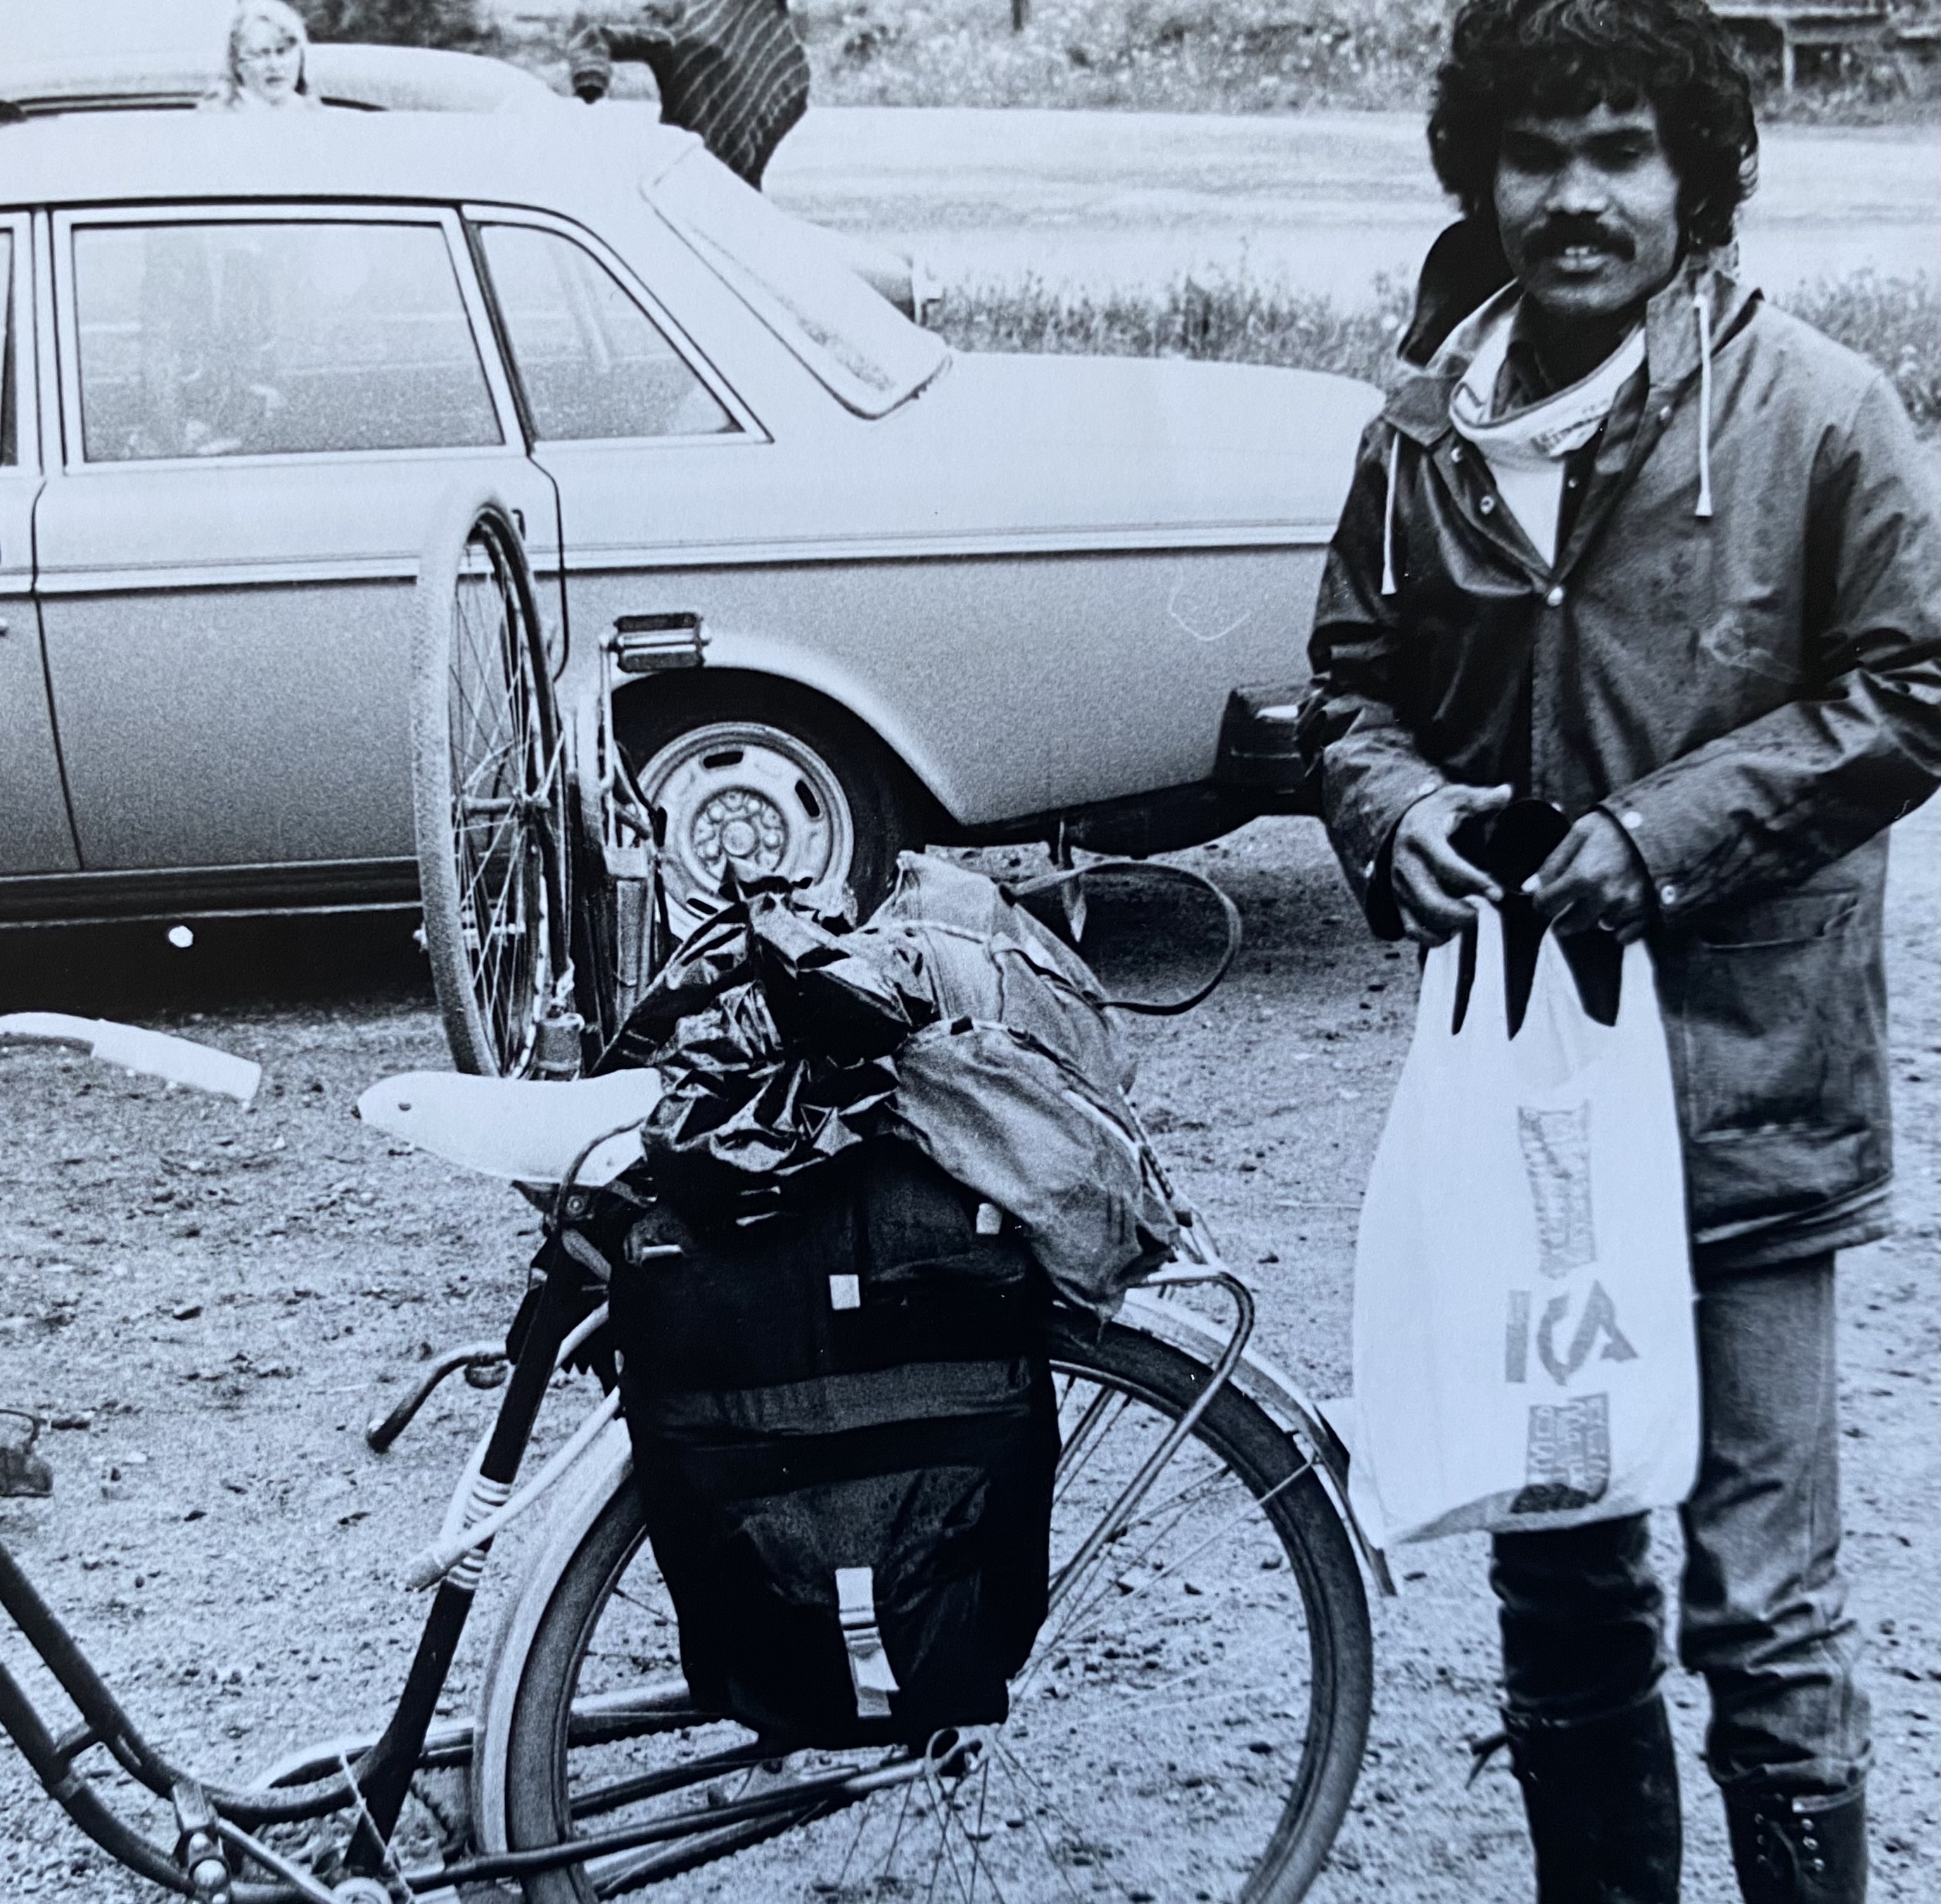 Pradyumna Kumar "PK" Mahanandia and his bicycle